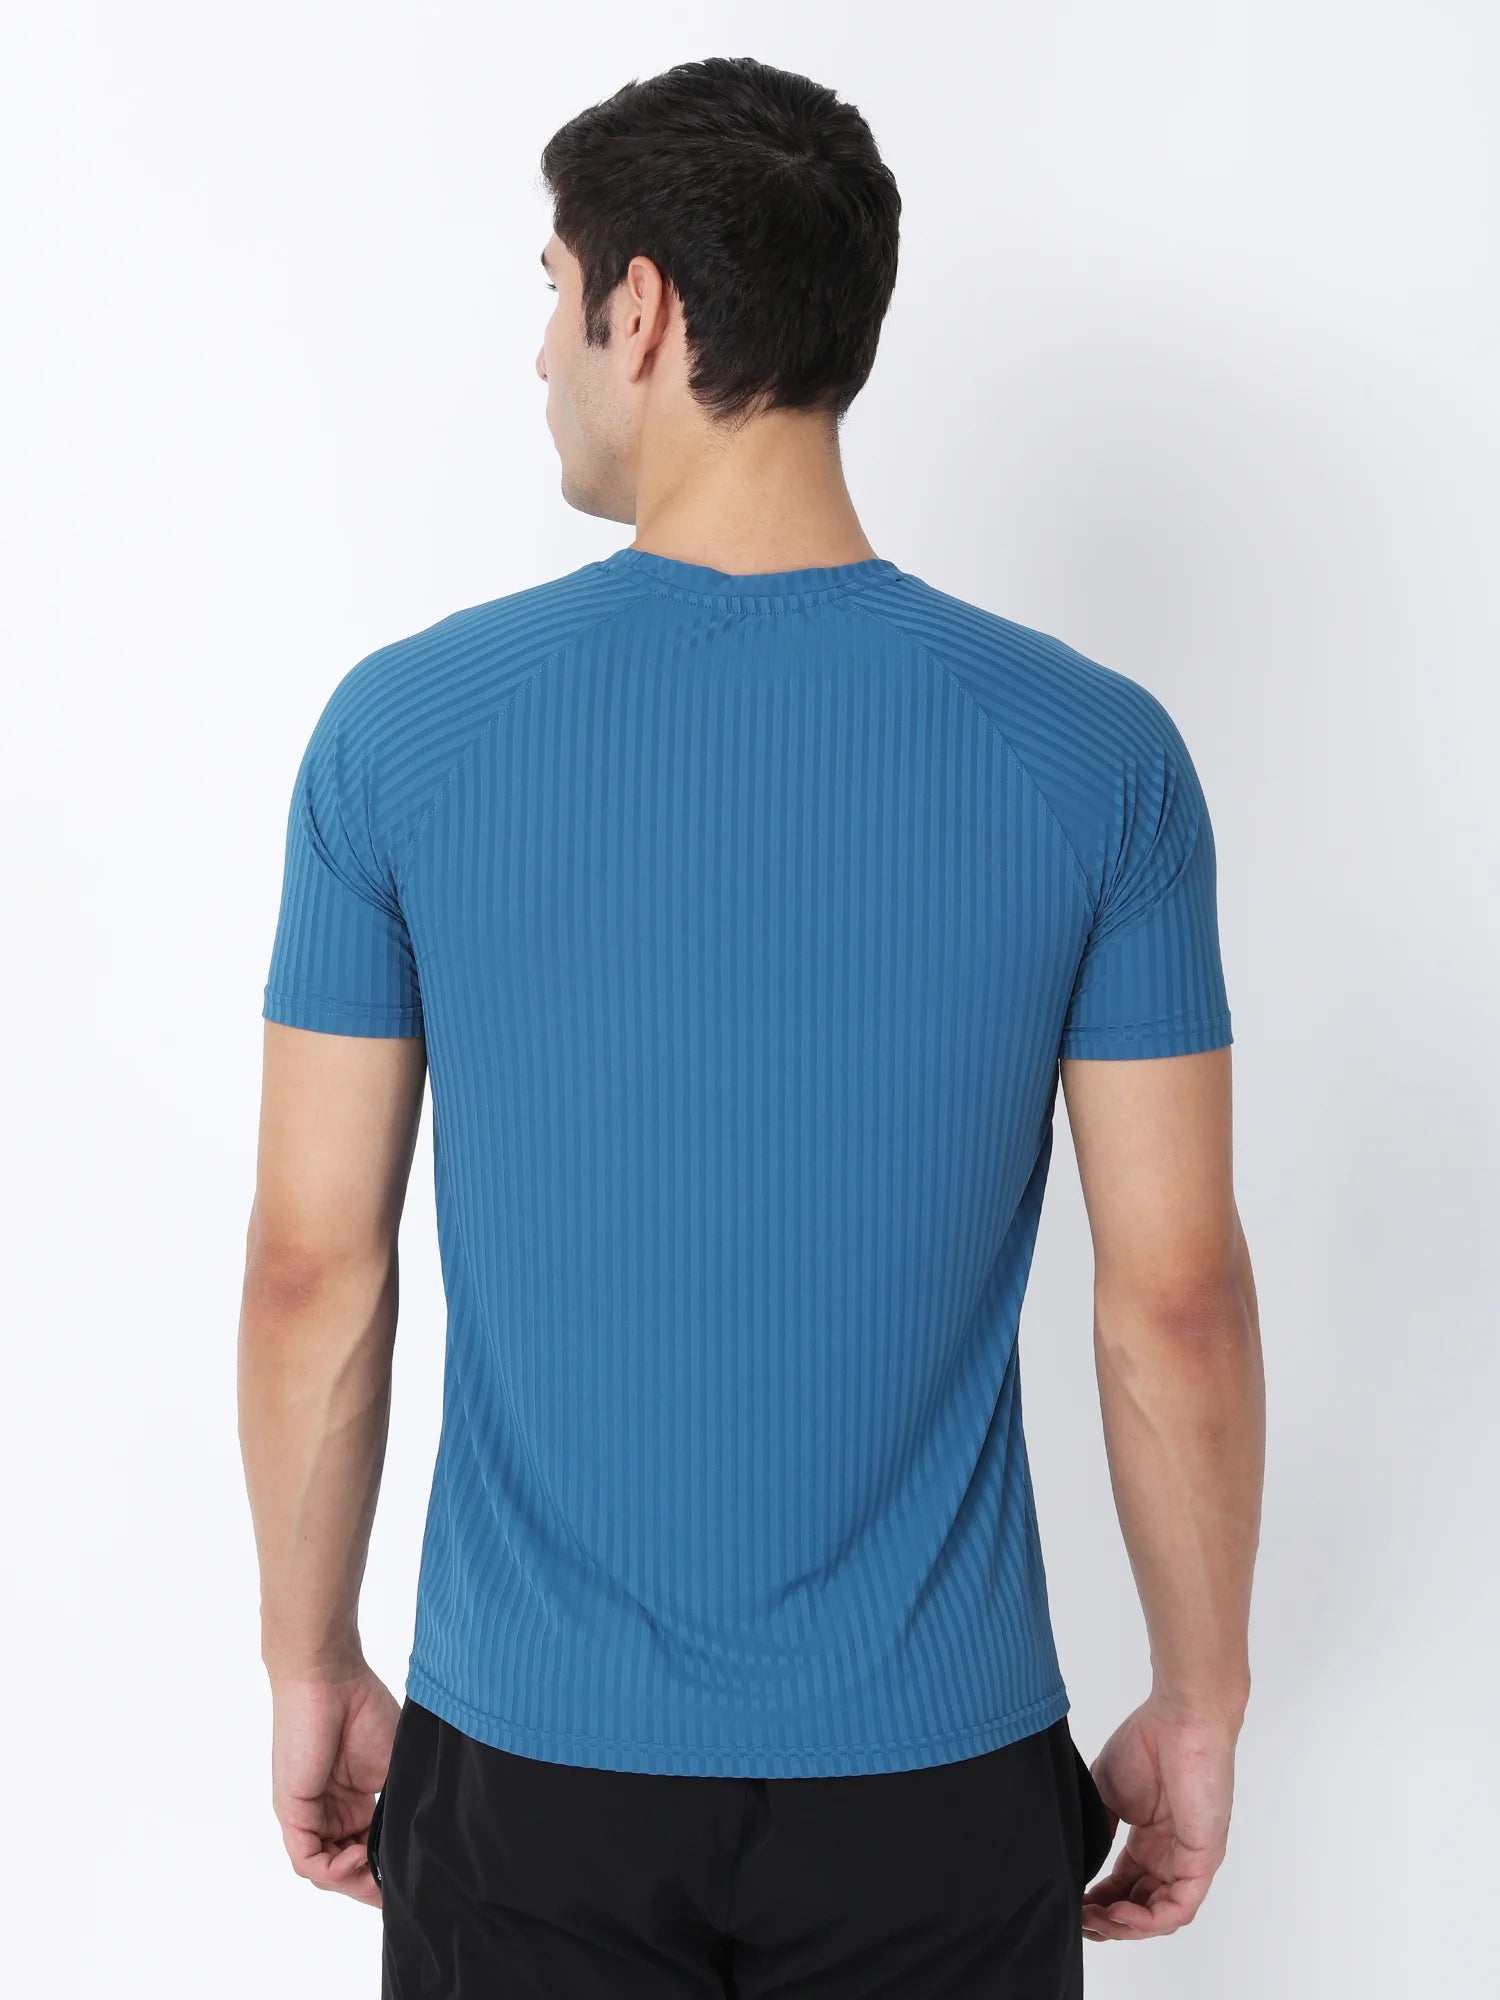 Jeffa Fit Fusion Nylon T-shirt in Blue